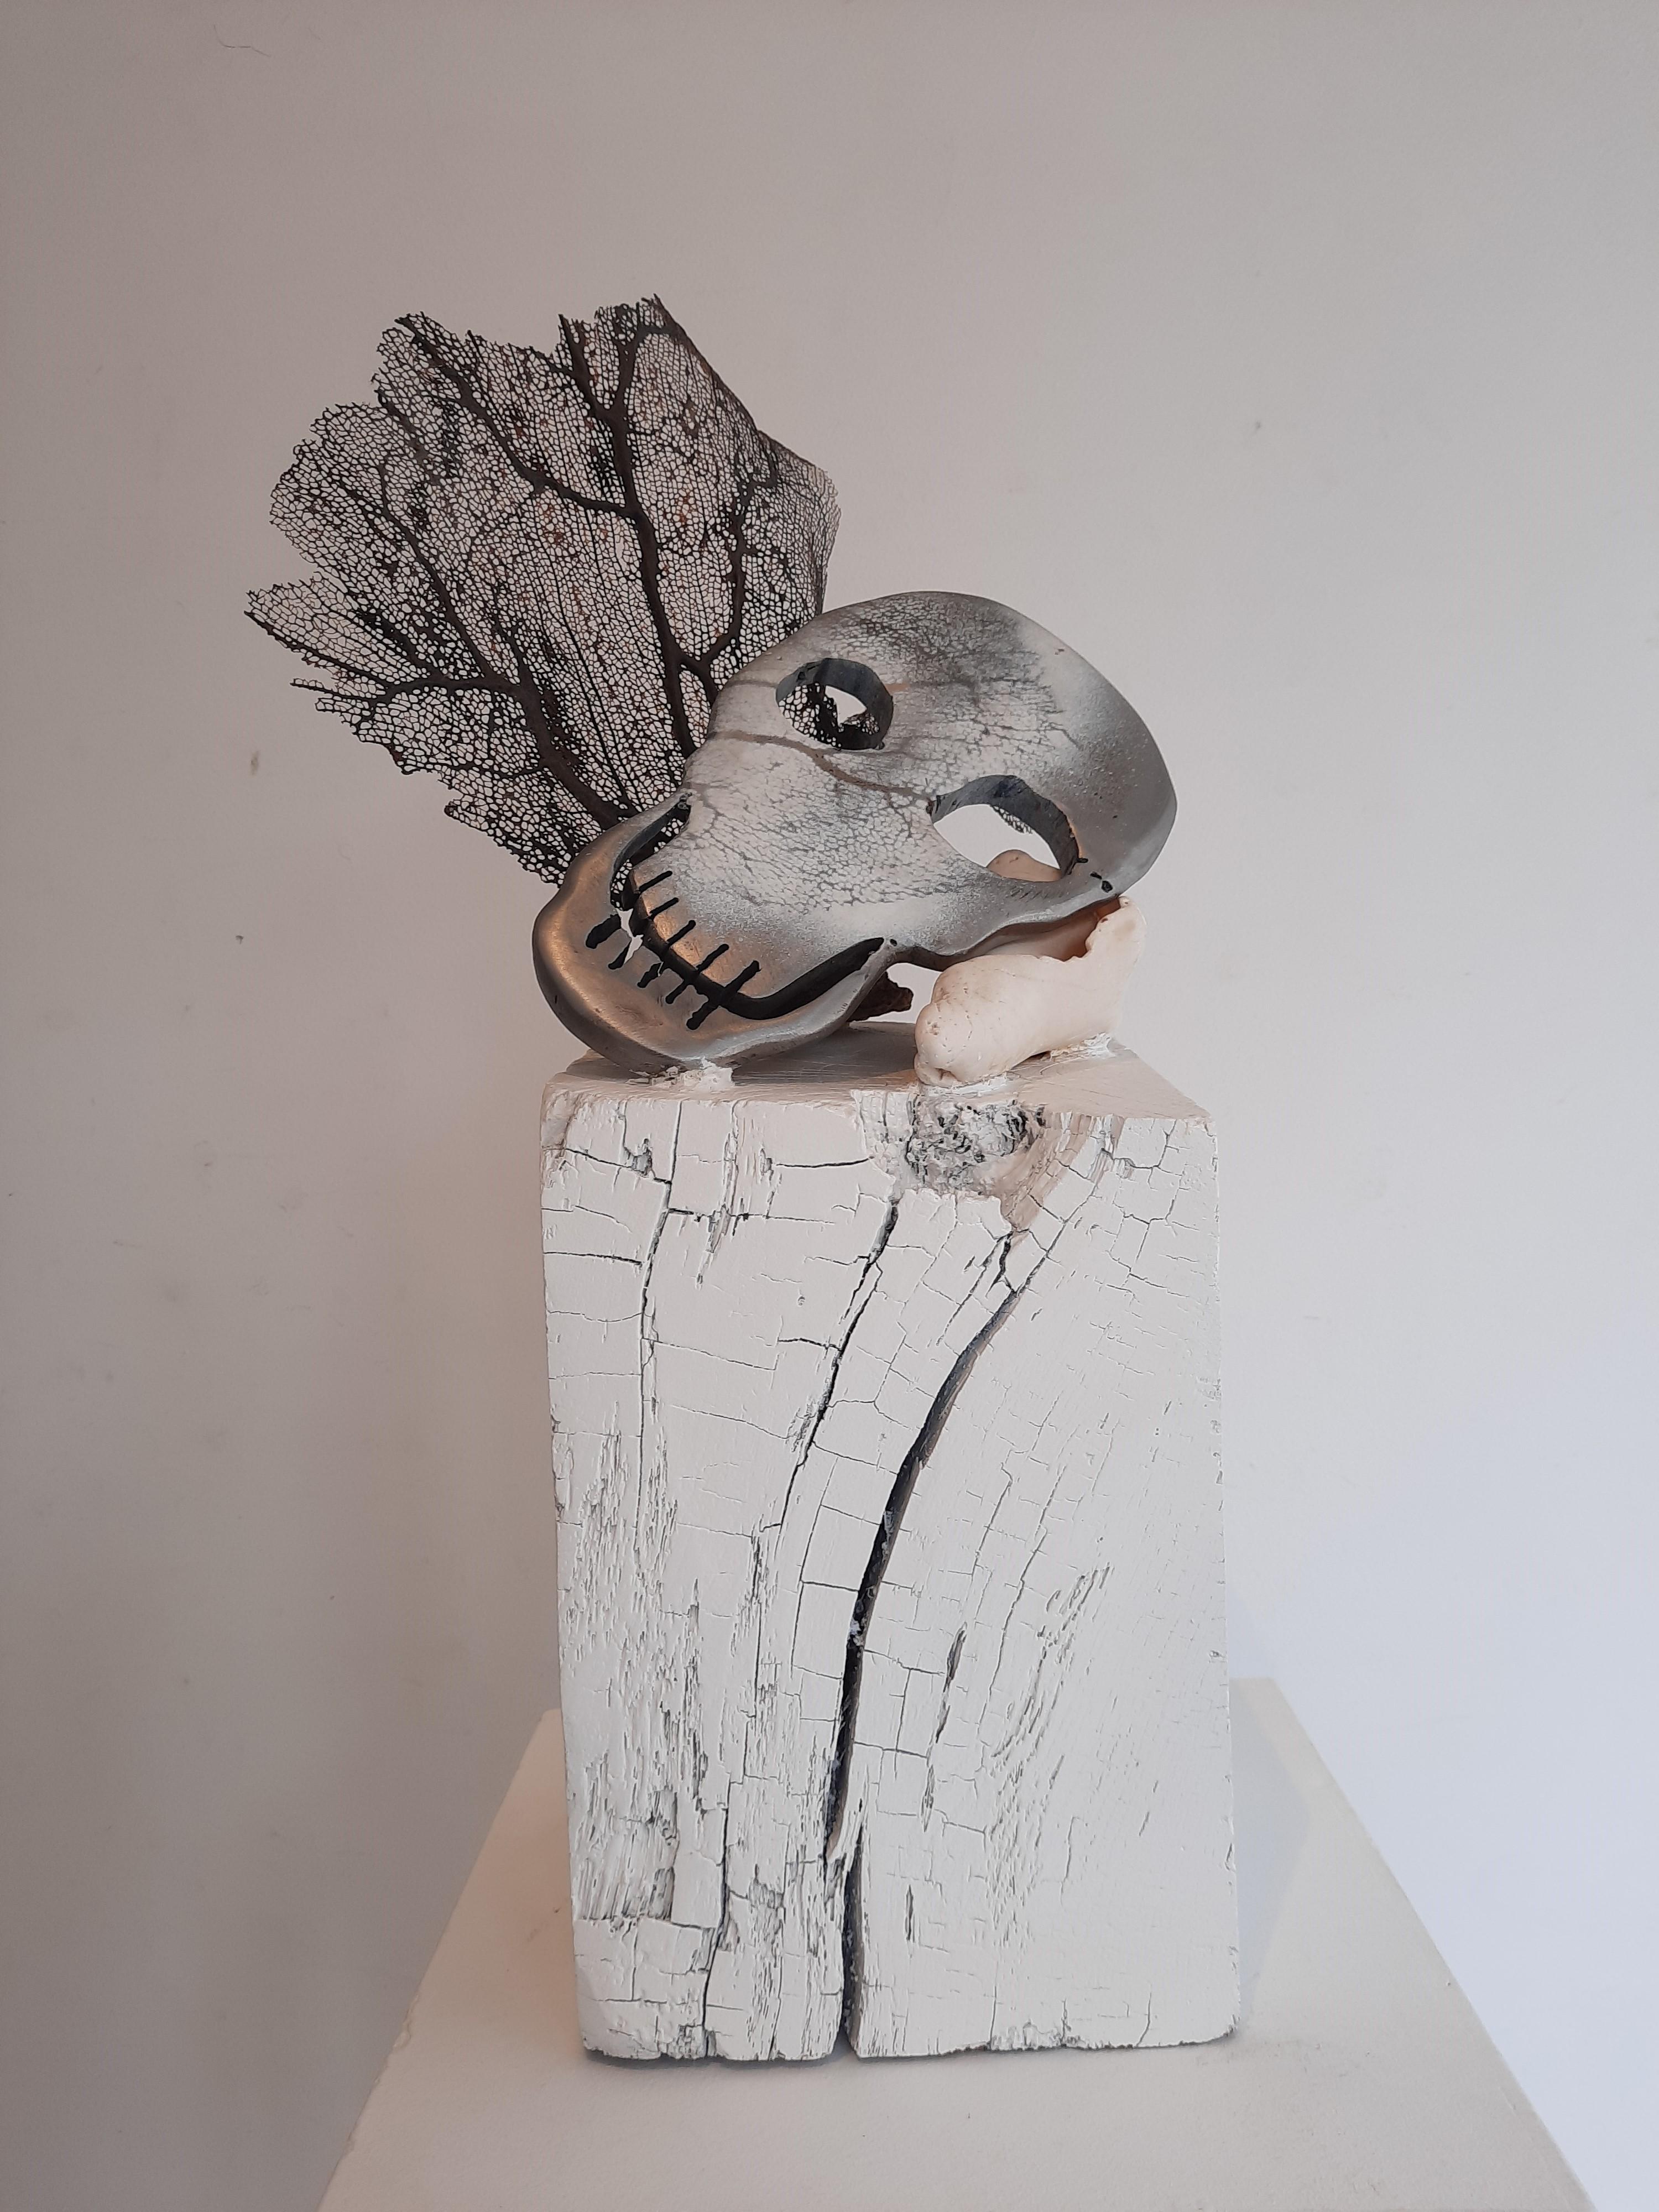 Chroniken - Haude Bernabé, 21. Jahrhundert, Contemporary Metallskulptur, Waschtisch im Angebot 1